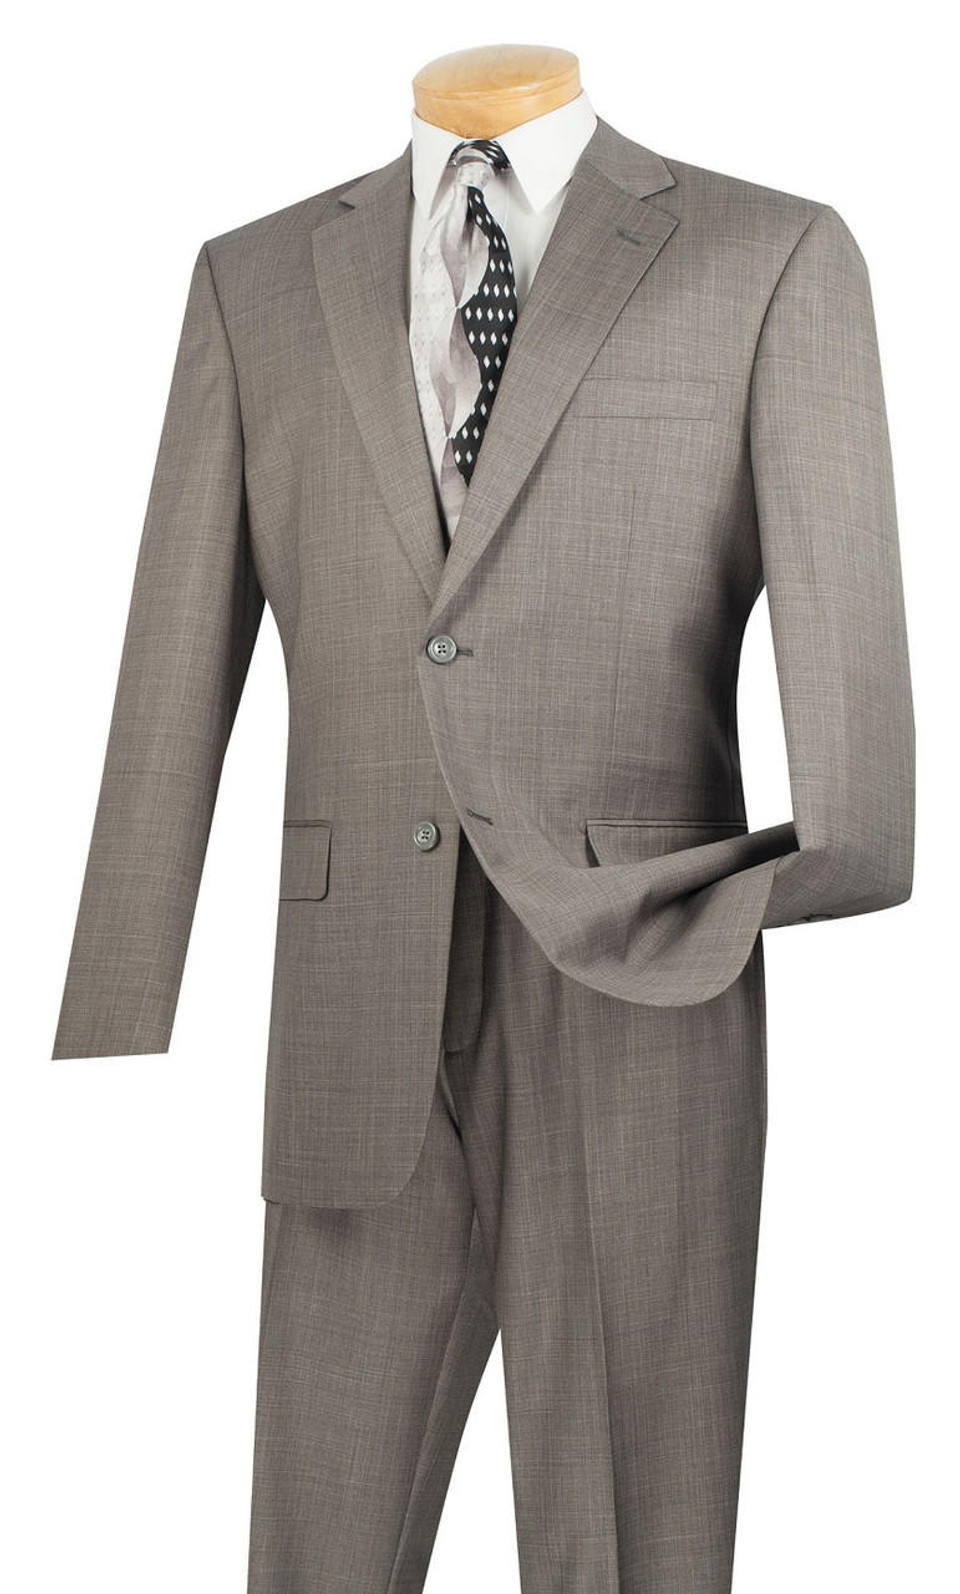 Steve Harvey 3 Piece Suit Gray Plaid Sharkskin 6793 Size 40R